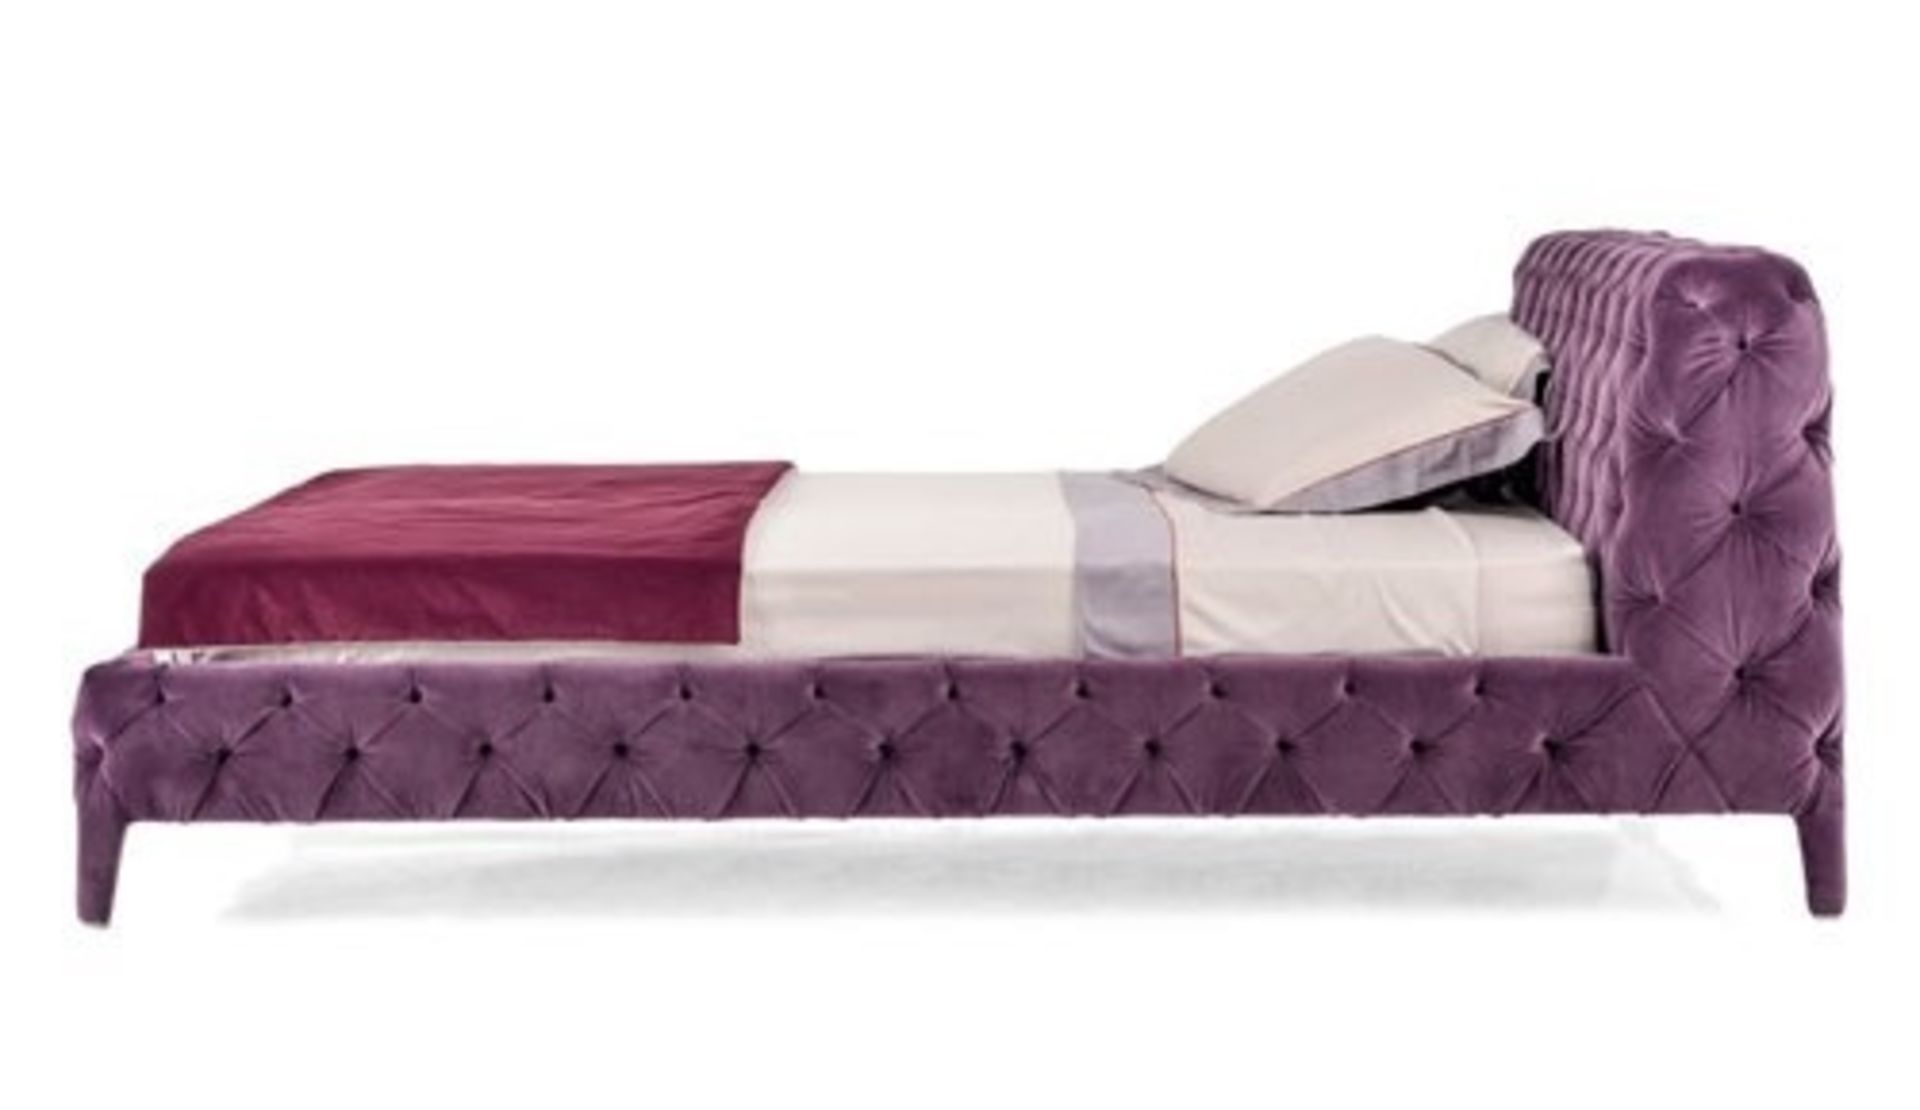 1 x Arketipo Windsor Dream Bed - 245x140cm (Custom Size - Please Read Description) - Upholstered - Image 5 of 7